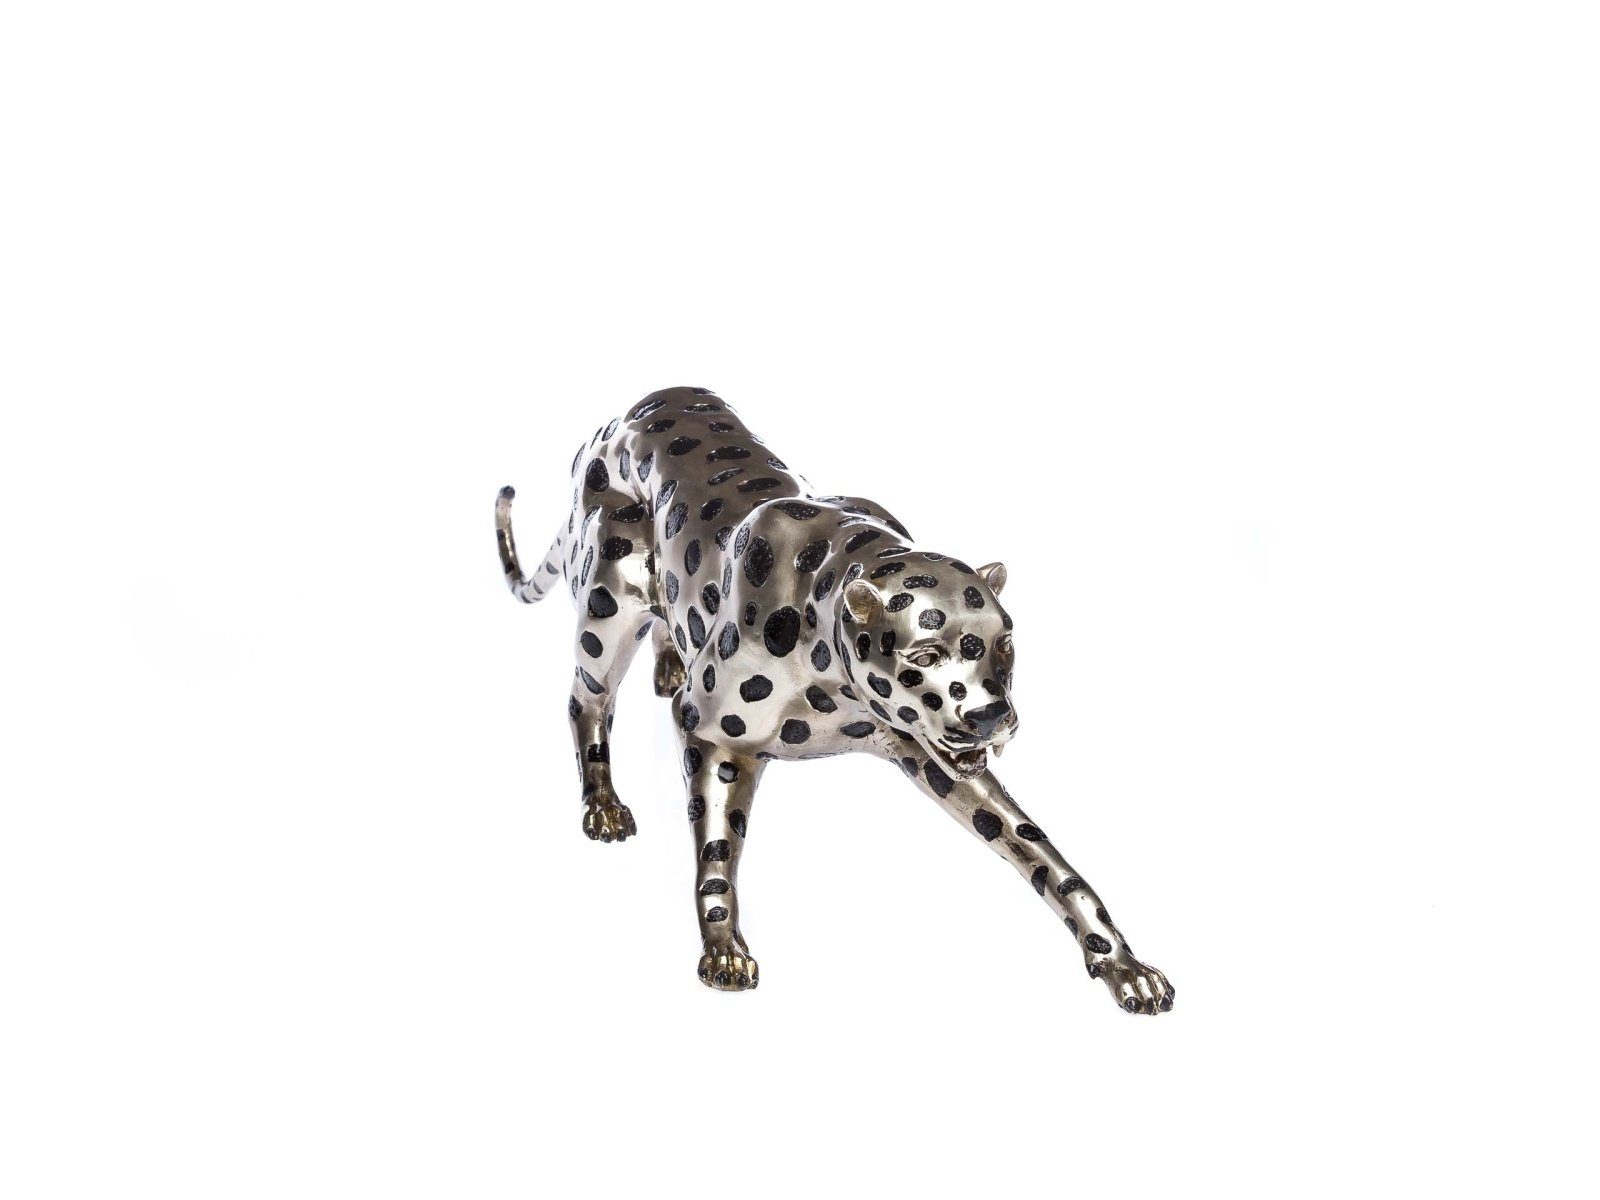 Aubaho Skulptur Bronze Figur sculptur Gepard 61cm Panther Skulptur Bronzeskulptur Puma